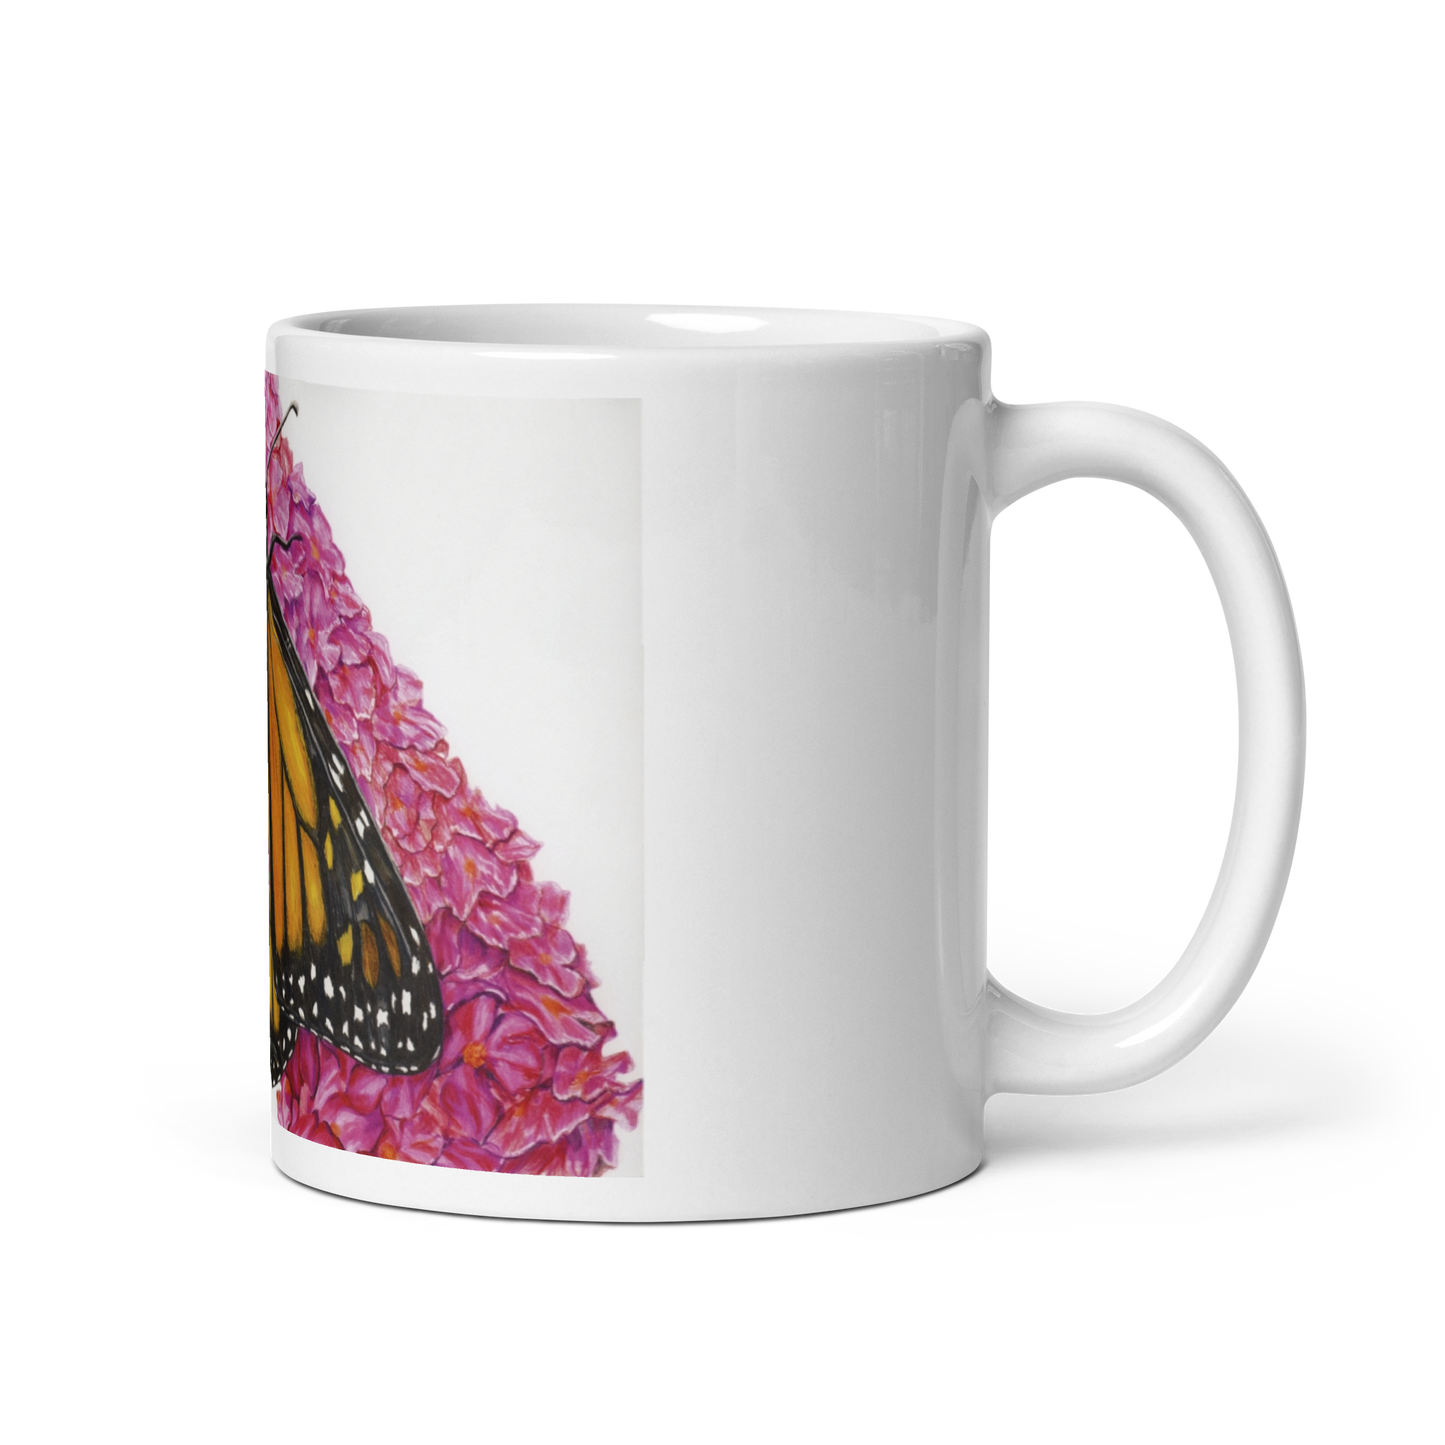 Metamorphosis - White glossy mug